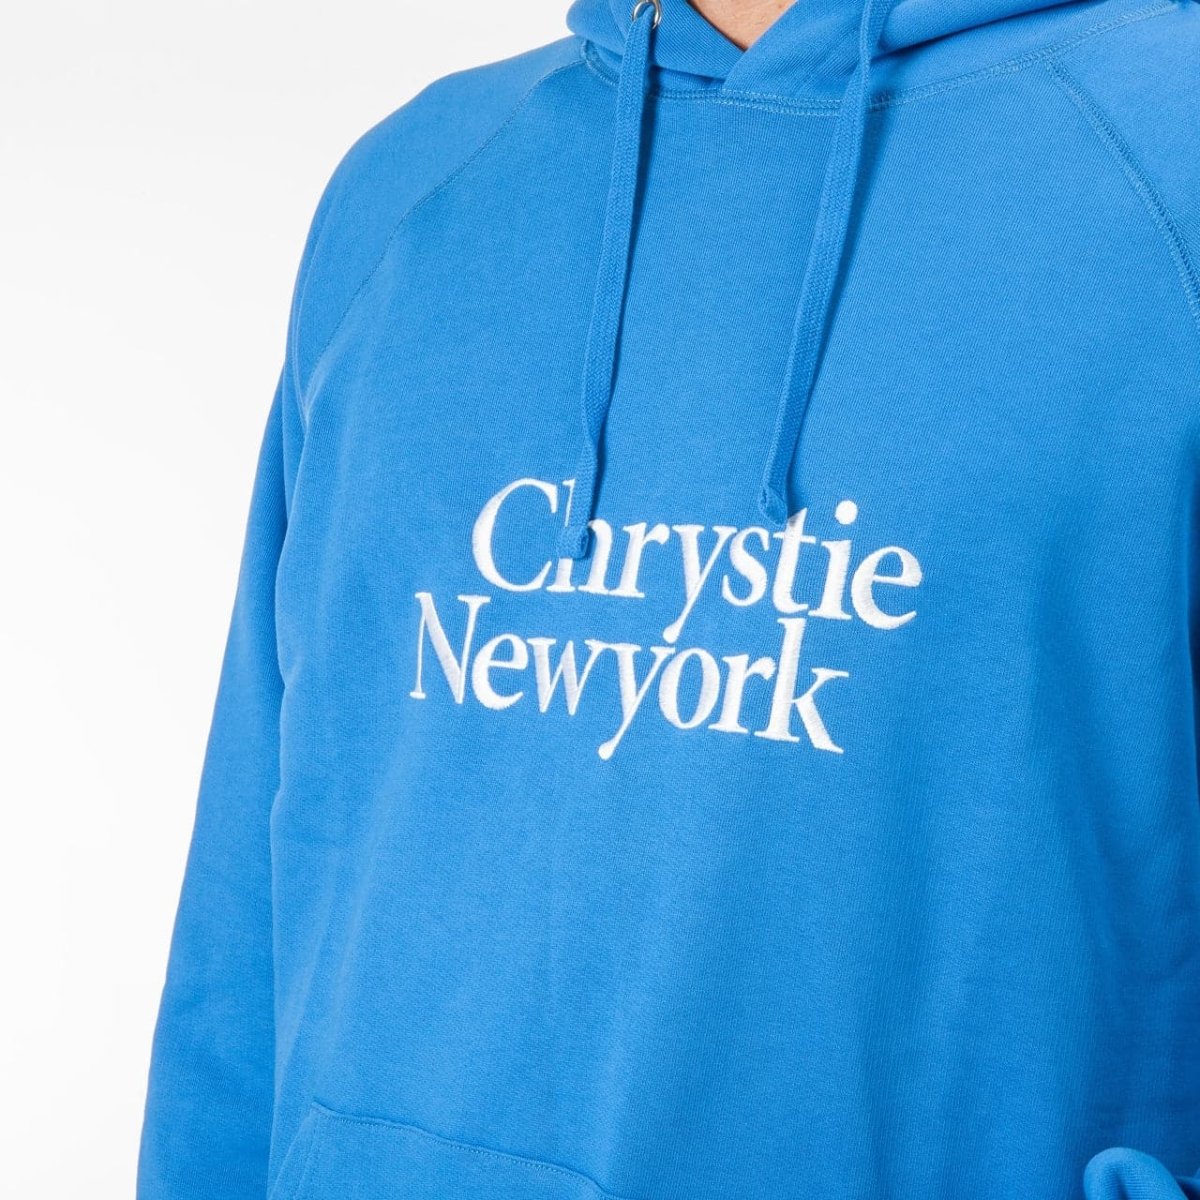 Chrystie NYC Chrystie Premium Newyork Hoodie (Blau)  - Allike Store